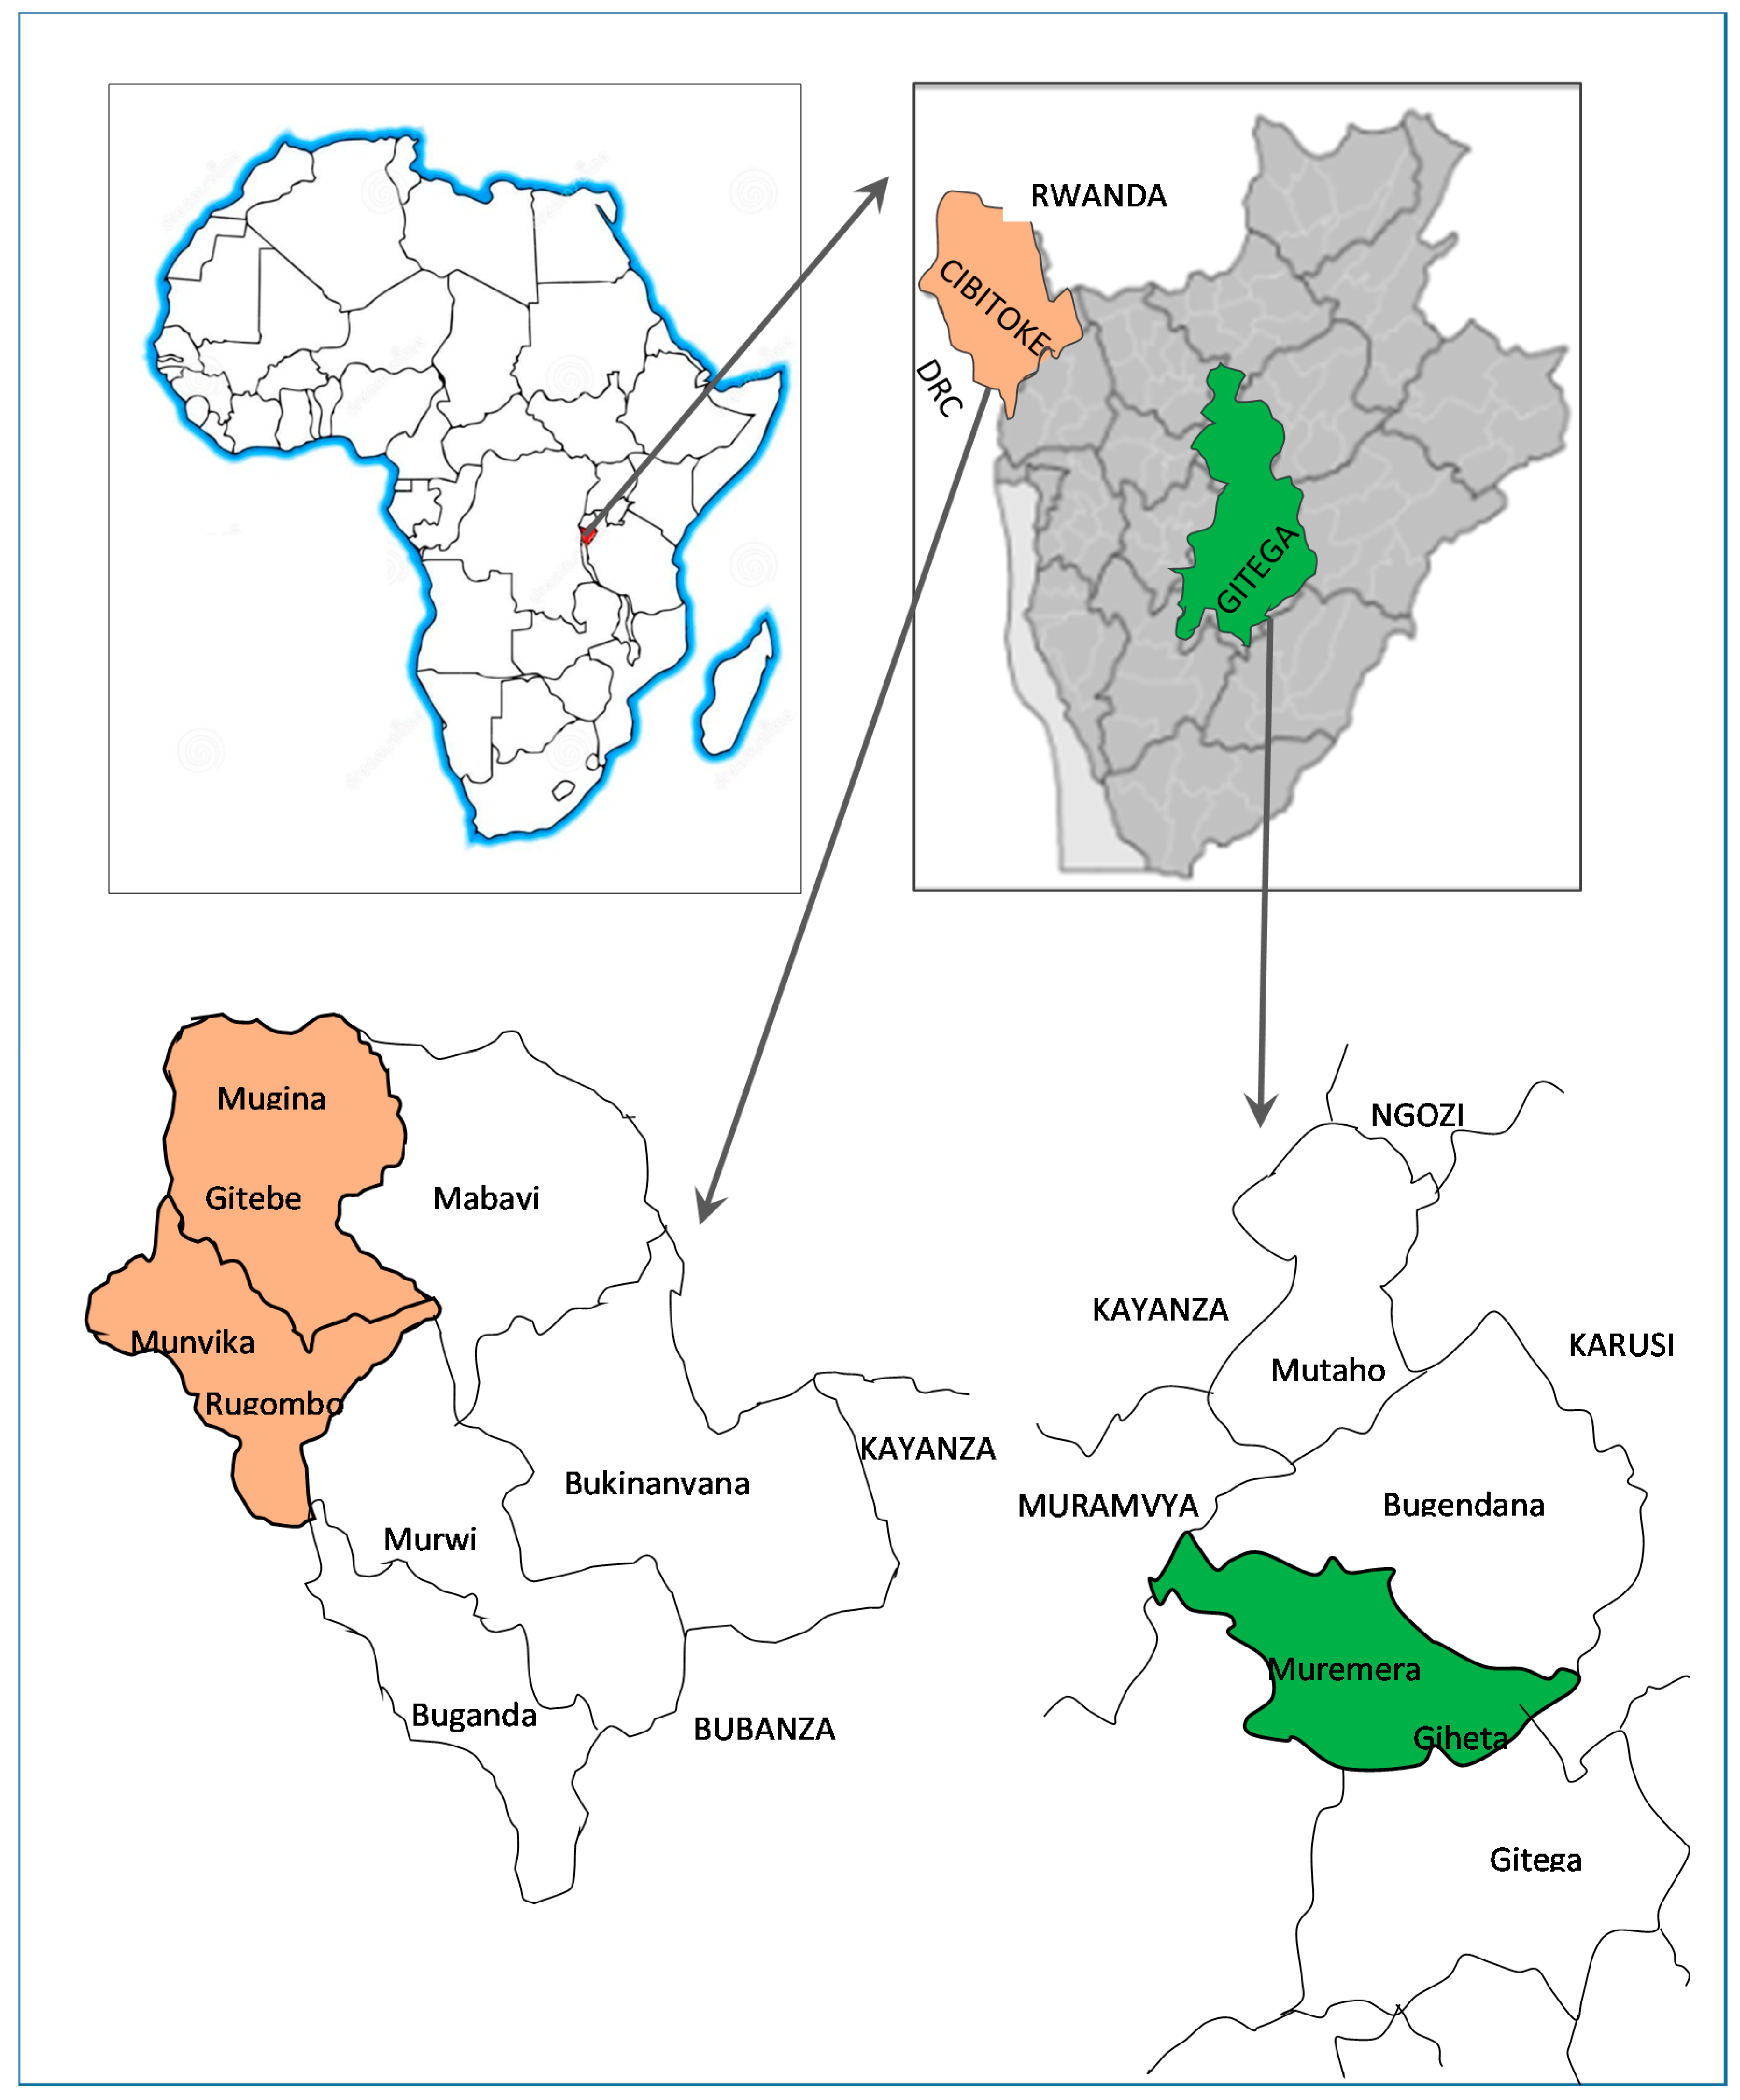 RISQUE ETHNIC-SUBSAHARIAN AFRICA-BELGIAN CONGO-MANDIBU-B33-194